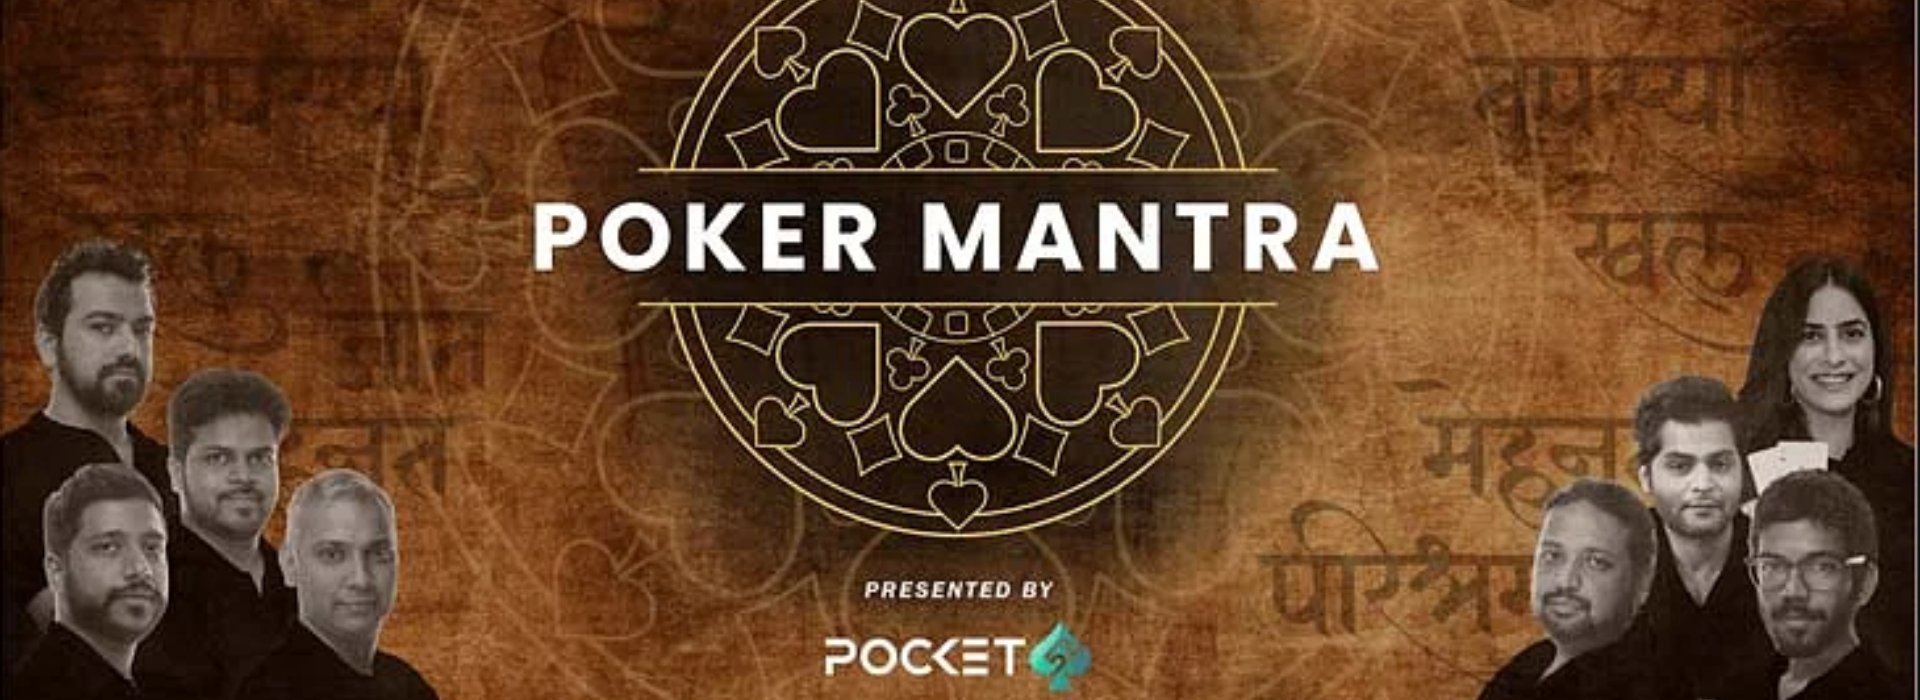 poker mantra voot